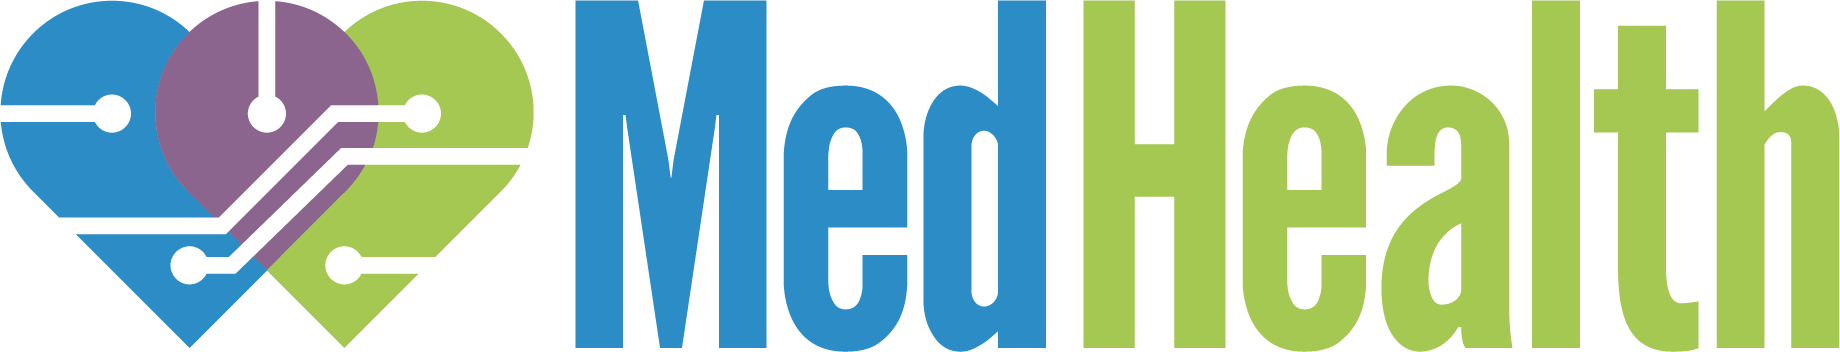 MedHealth-logo.png